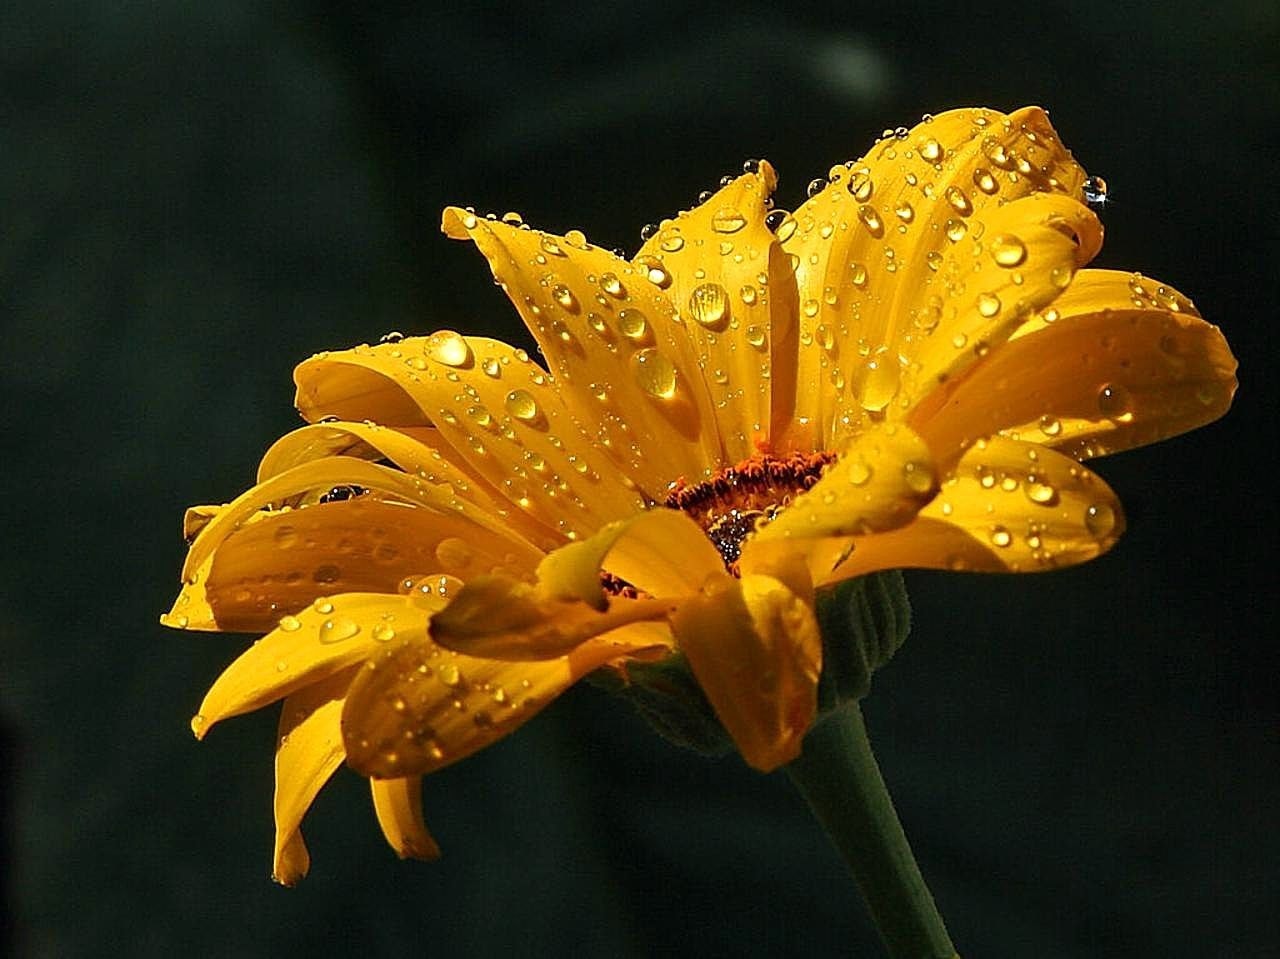 Raindrops, Daisy, Drops, Dew, Water, flower, petal